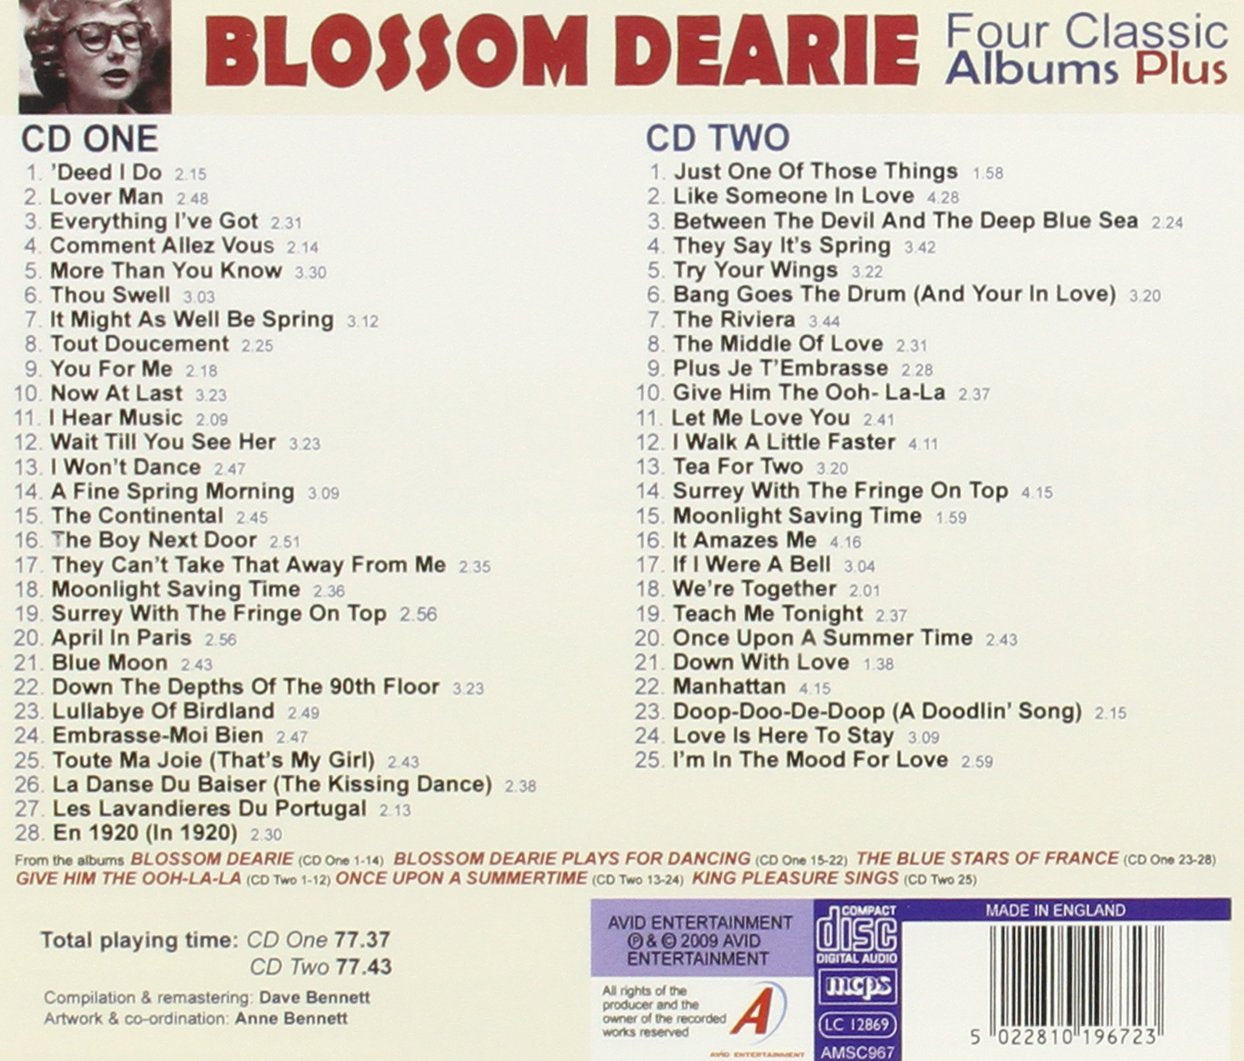 BLOSSOM DEARIE - Four Classic Albums Plus (Blossom Dearie / Blossom Dearie Plays For Dancing / Give Him The Ooh-La-La / Once Upon A Summertime)